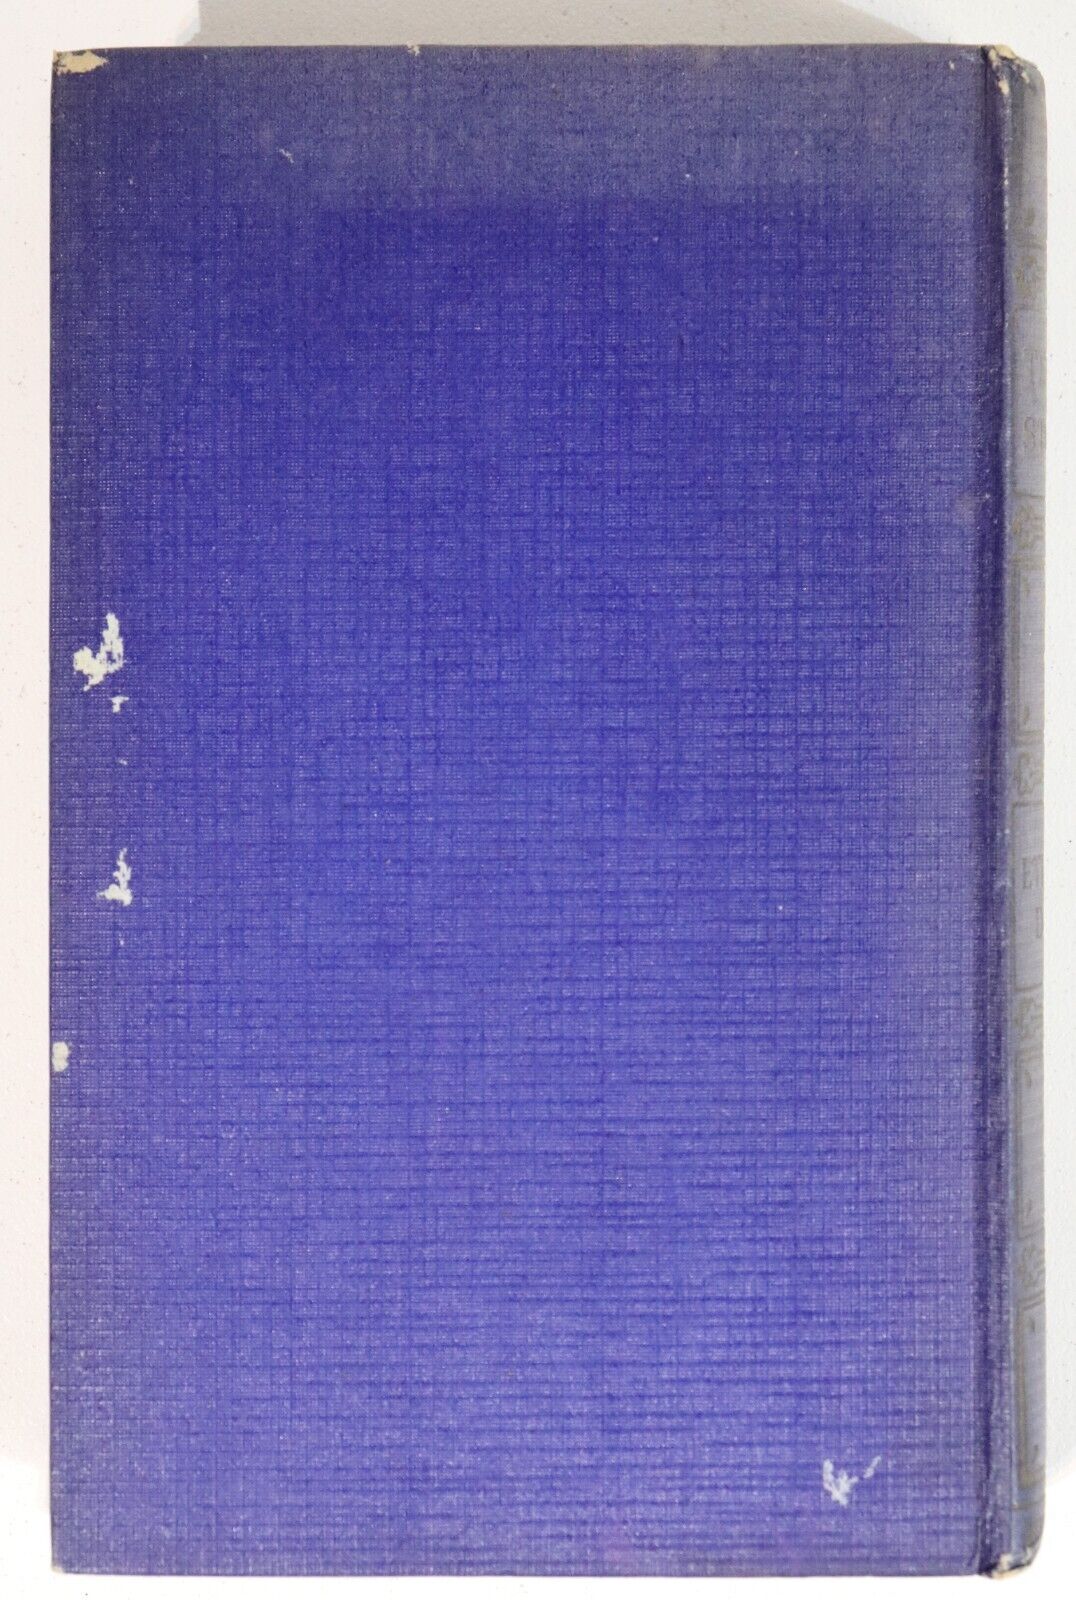 Tetherstones by Ethel M. Dell - c1920 - Antique Literature Fiction Book